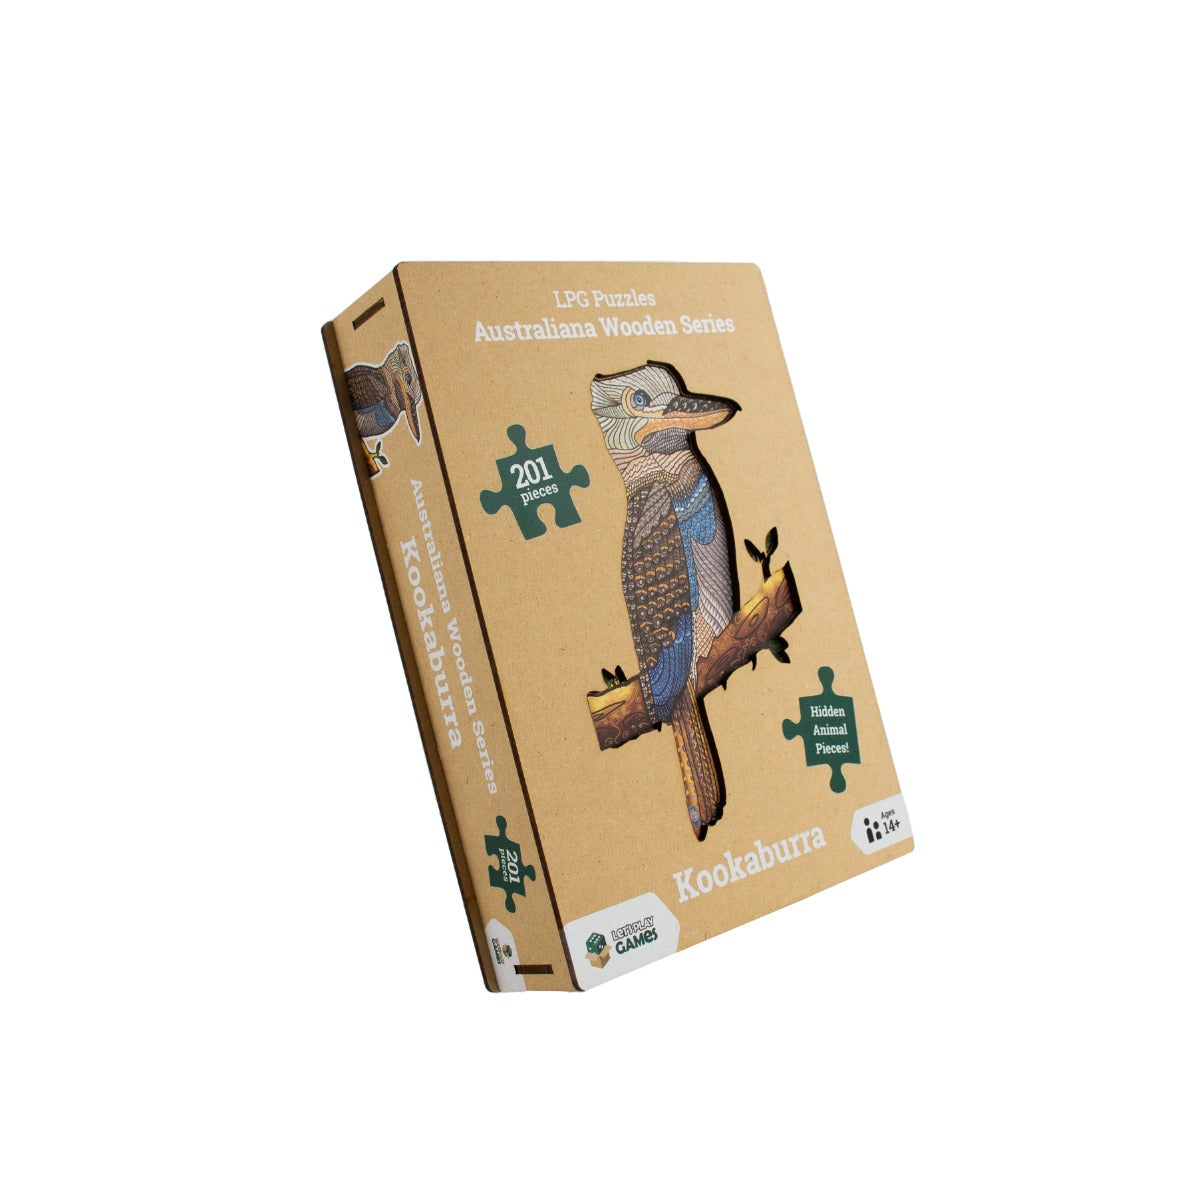 Kookaburra 201pc - Australiania Wooden Series (LPG Puzzles)